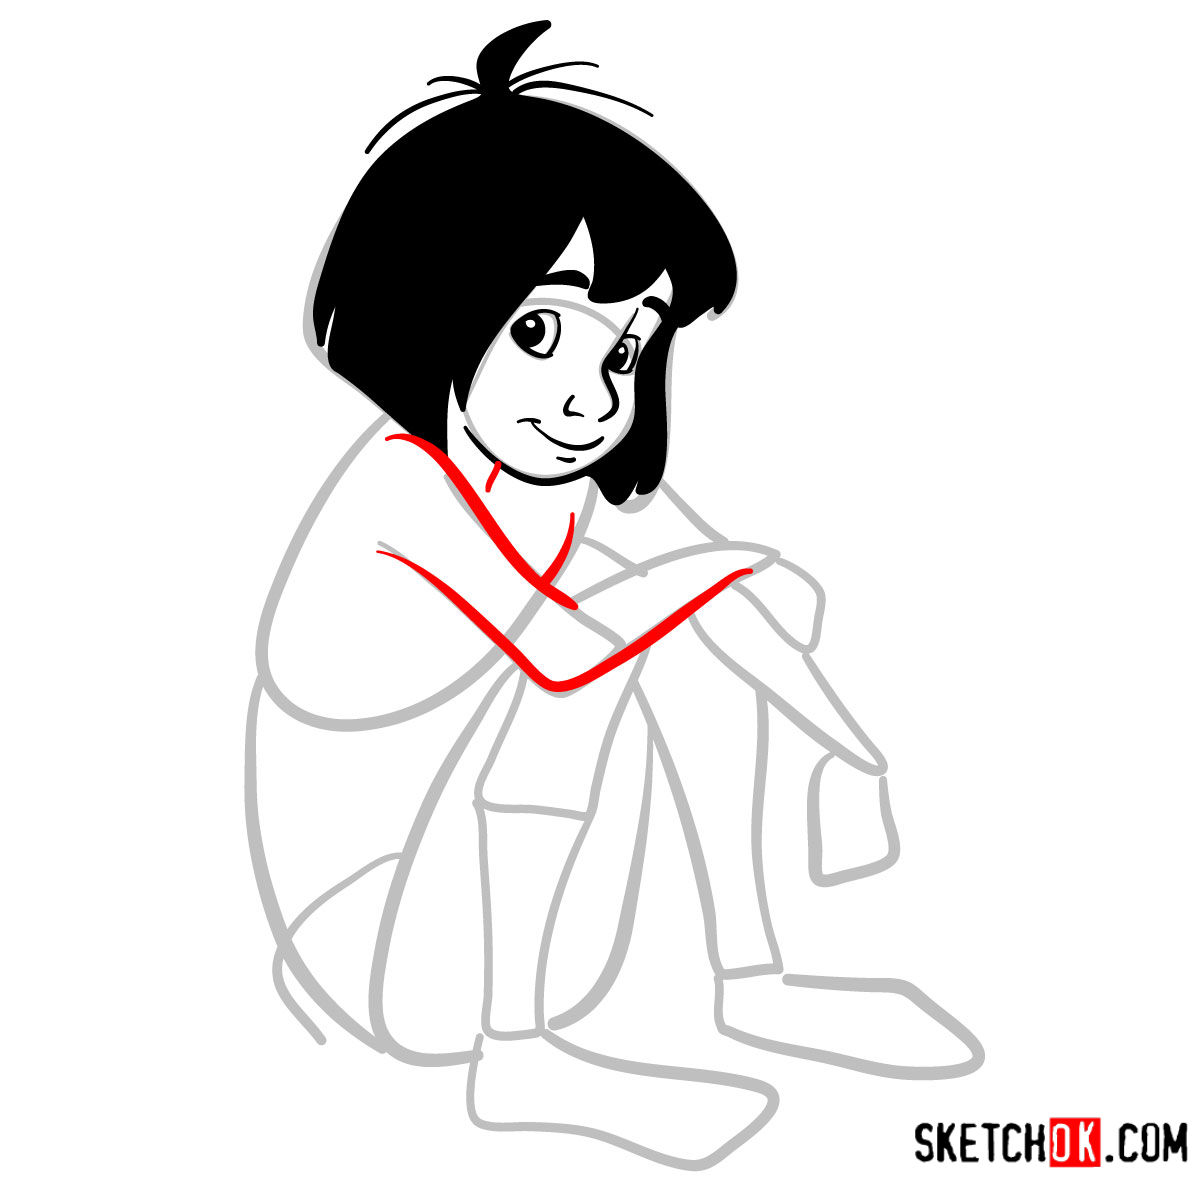 How to draw Mowgli | The Jungle Book - step 06